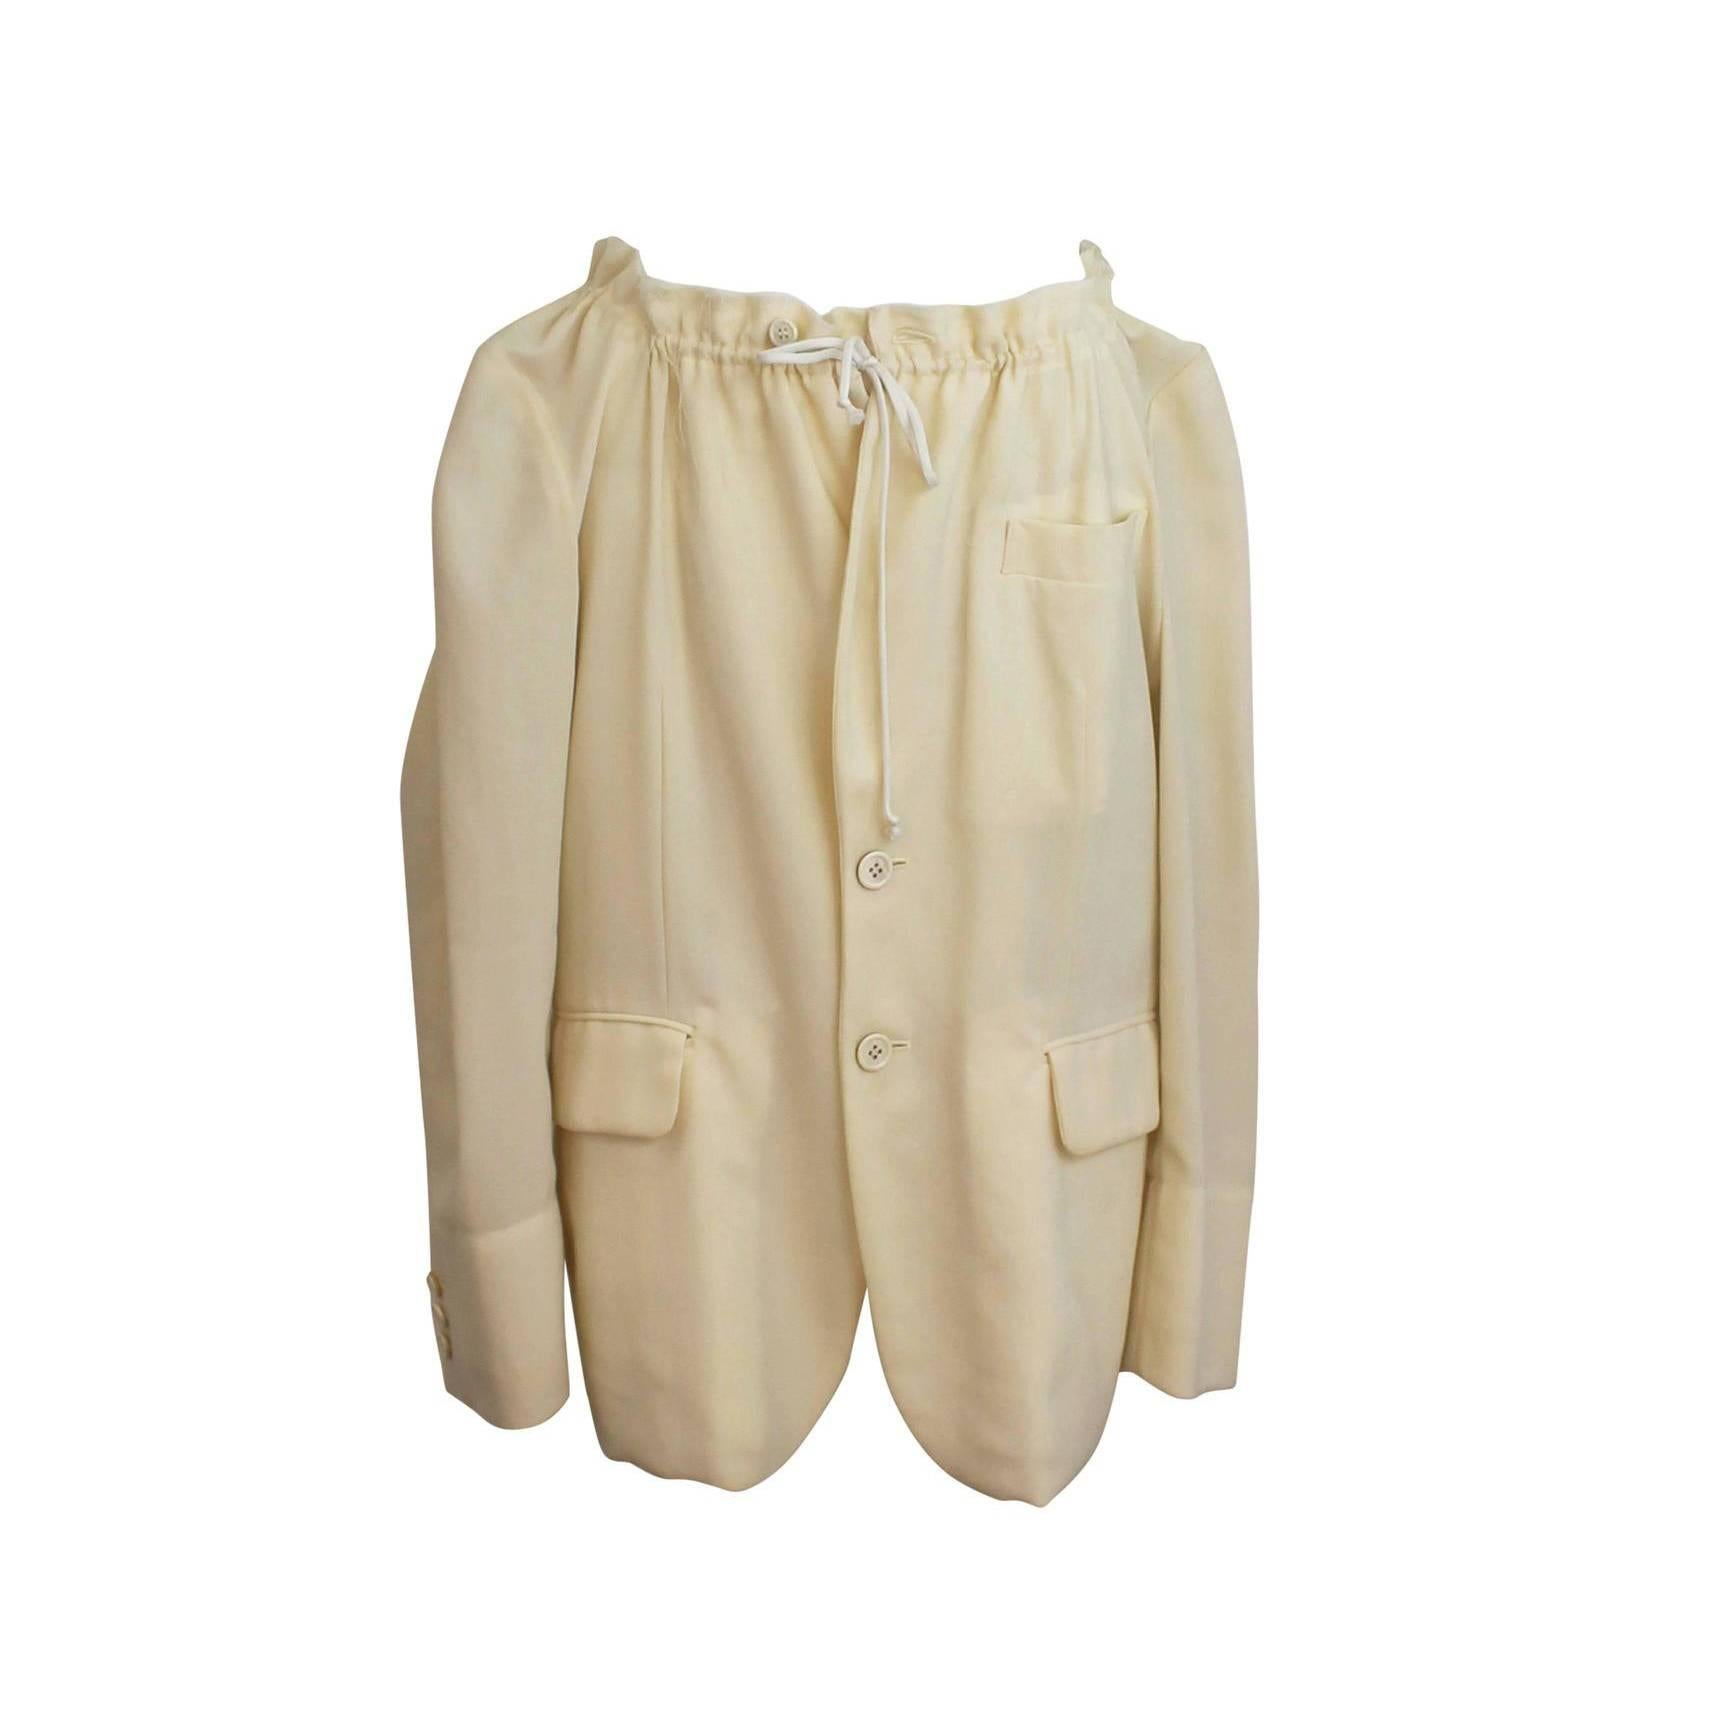 Comme des Garcons SS 2001 Skirt-Jacket